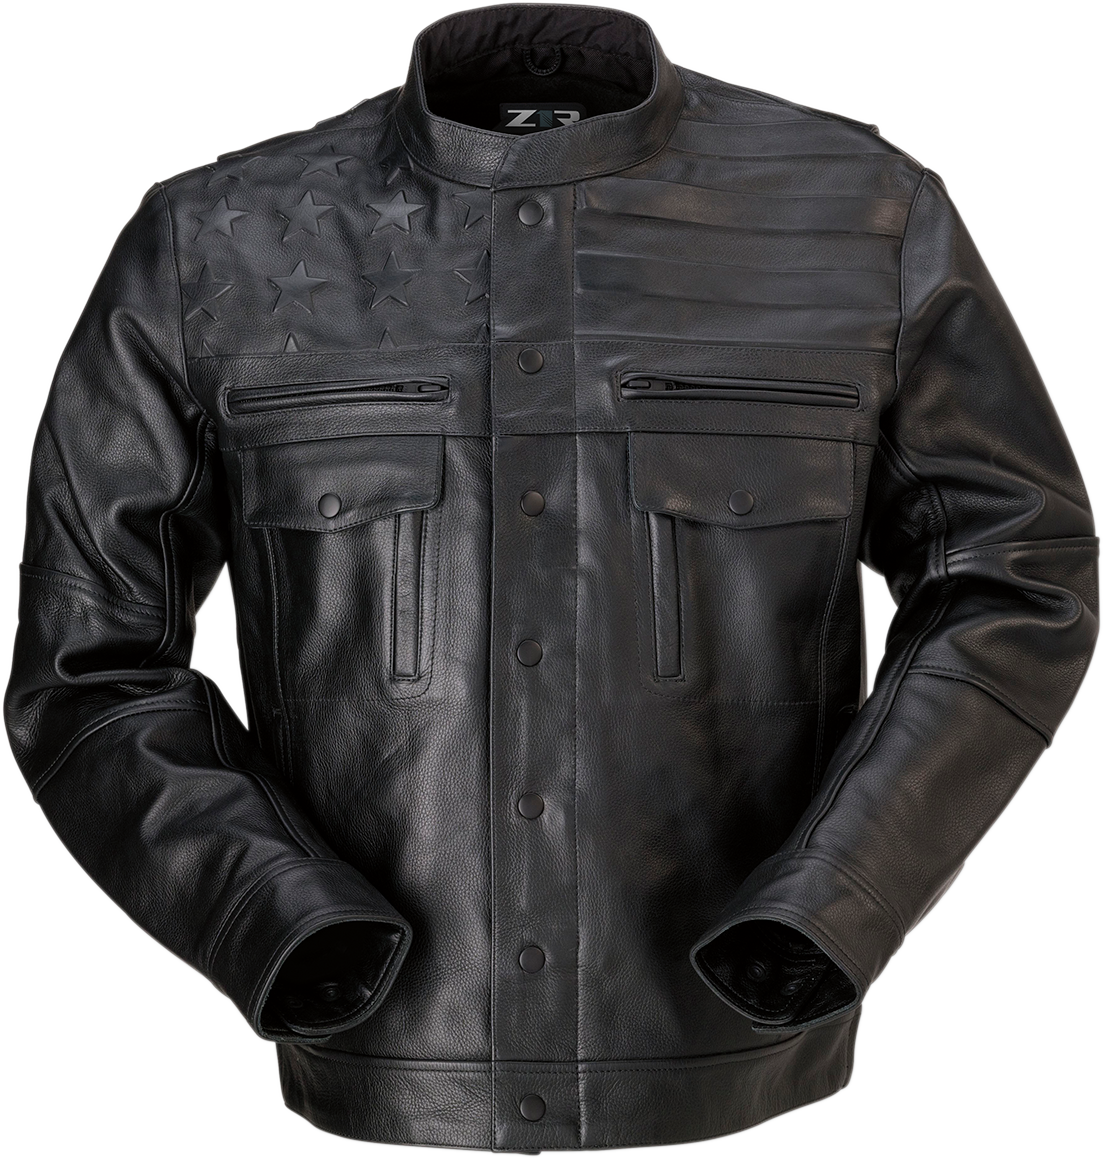 Z1R Deagle Leather Jacket - Black - 3XL 2810-3762